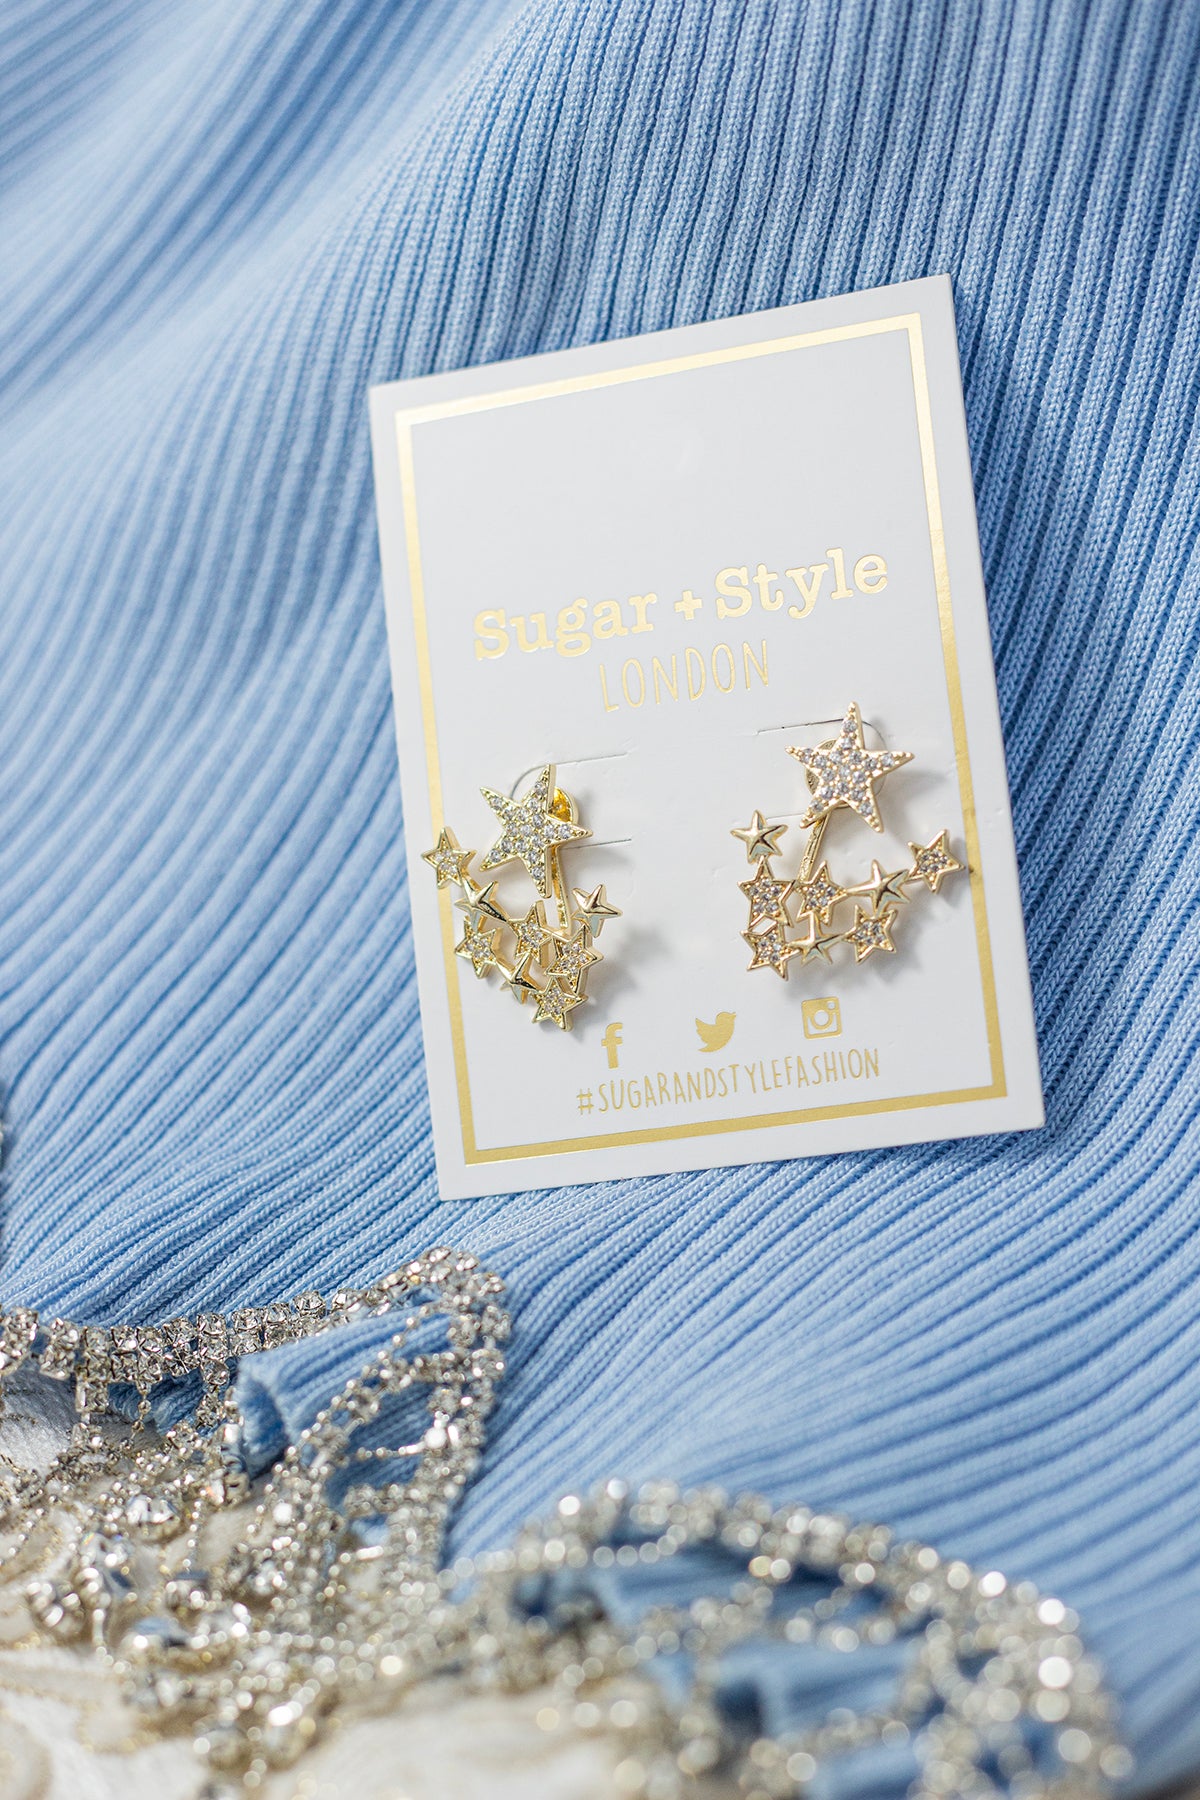 Star Constellation Diamante Earrings - Sugar + Style